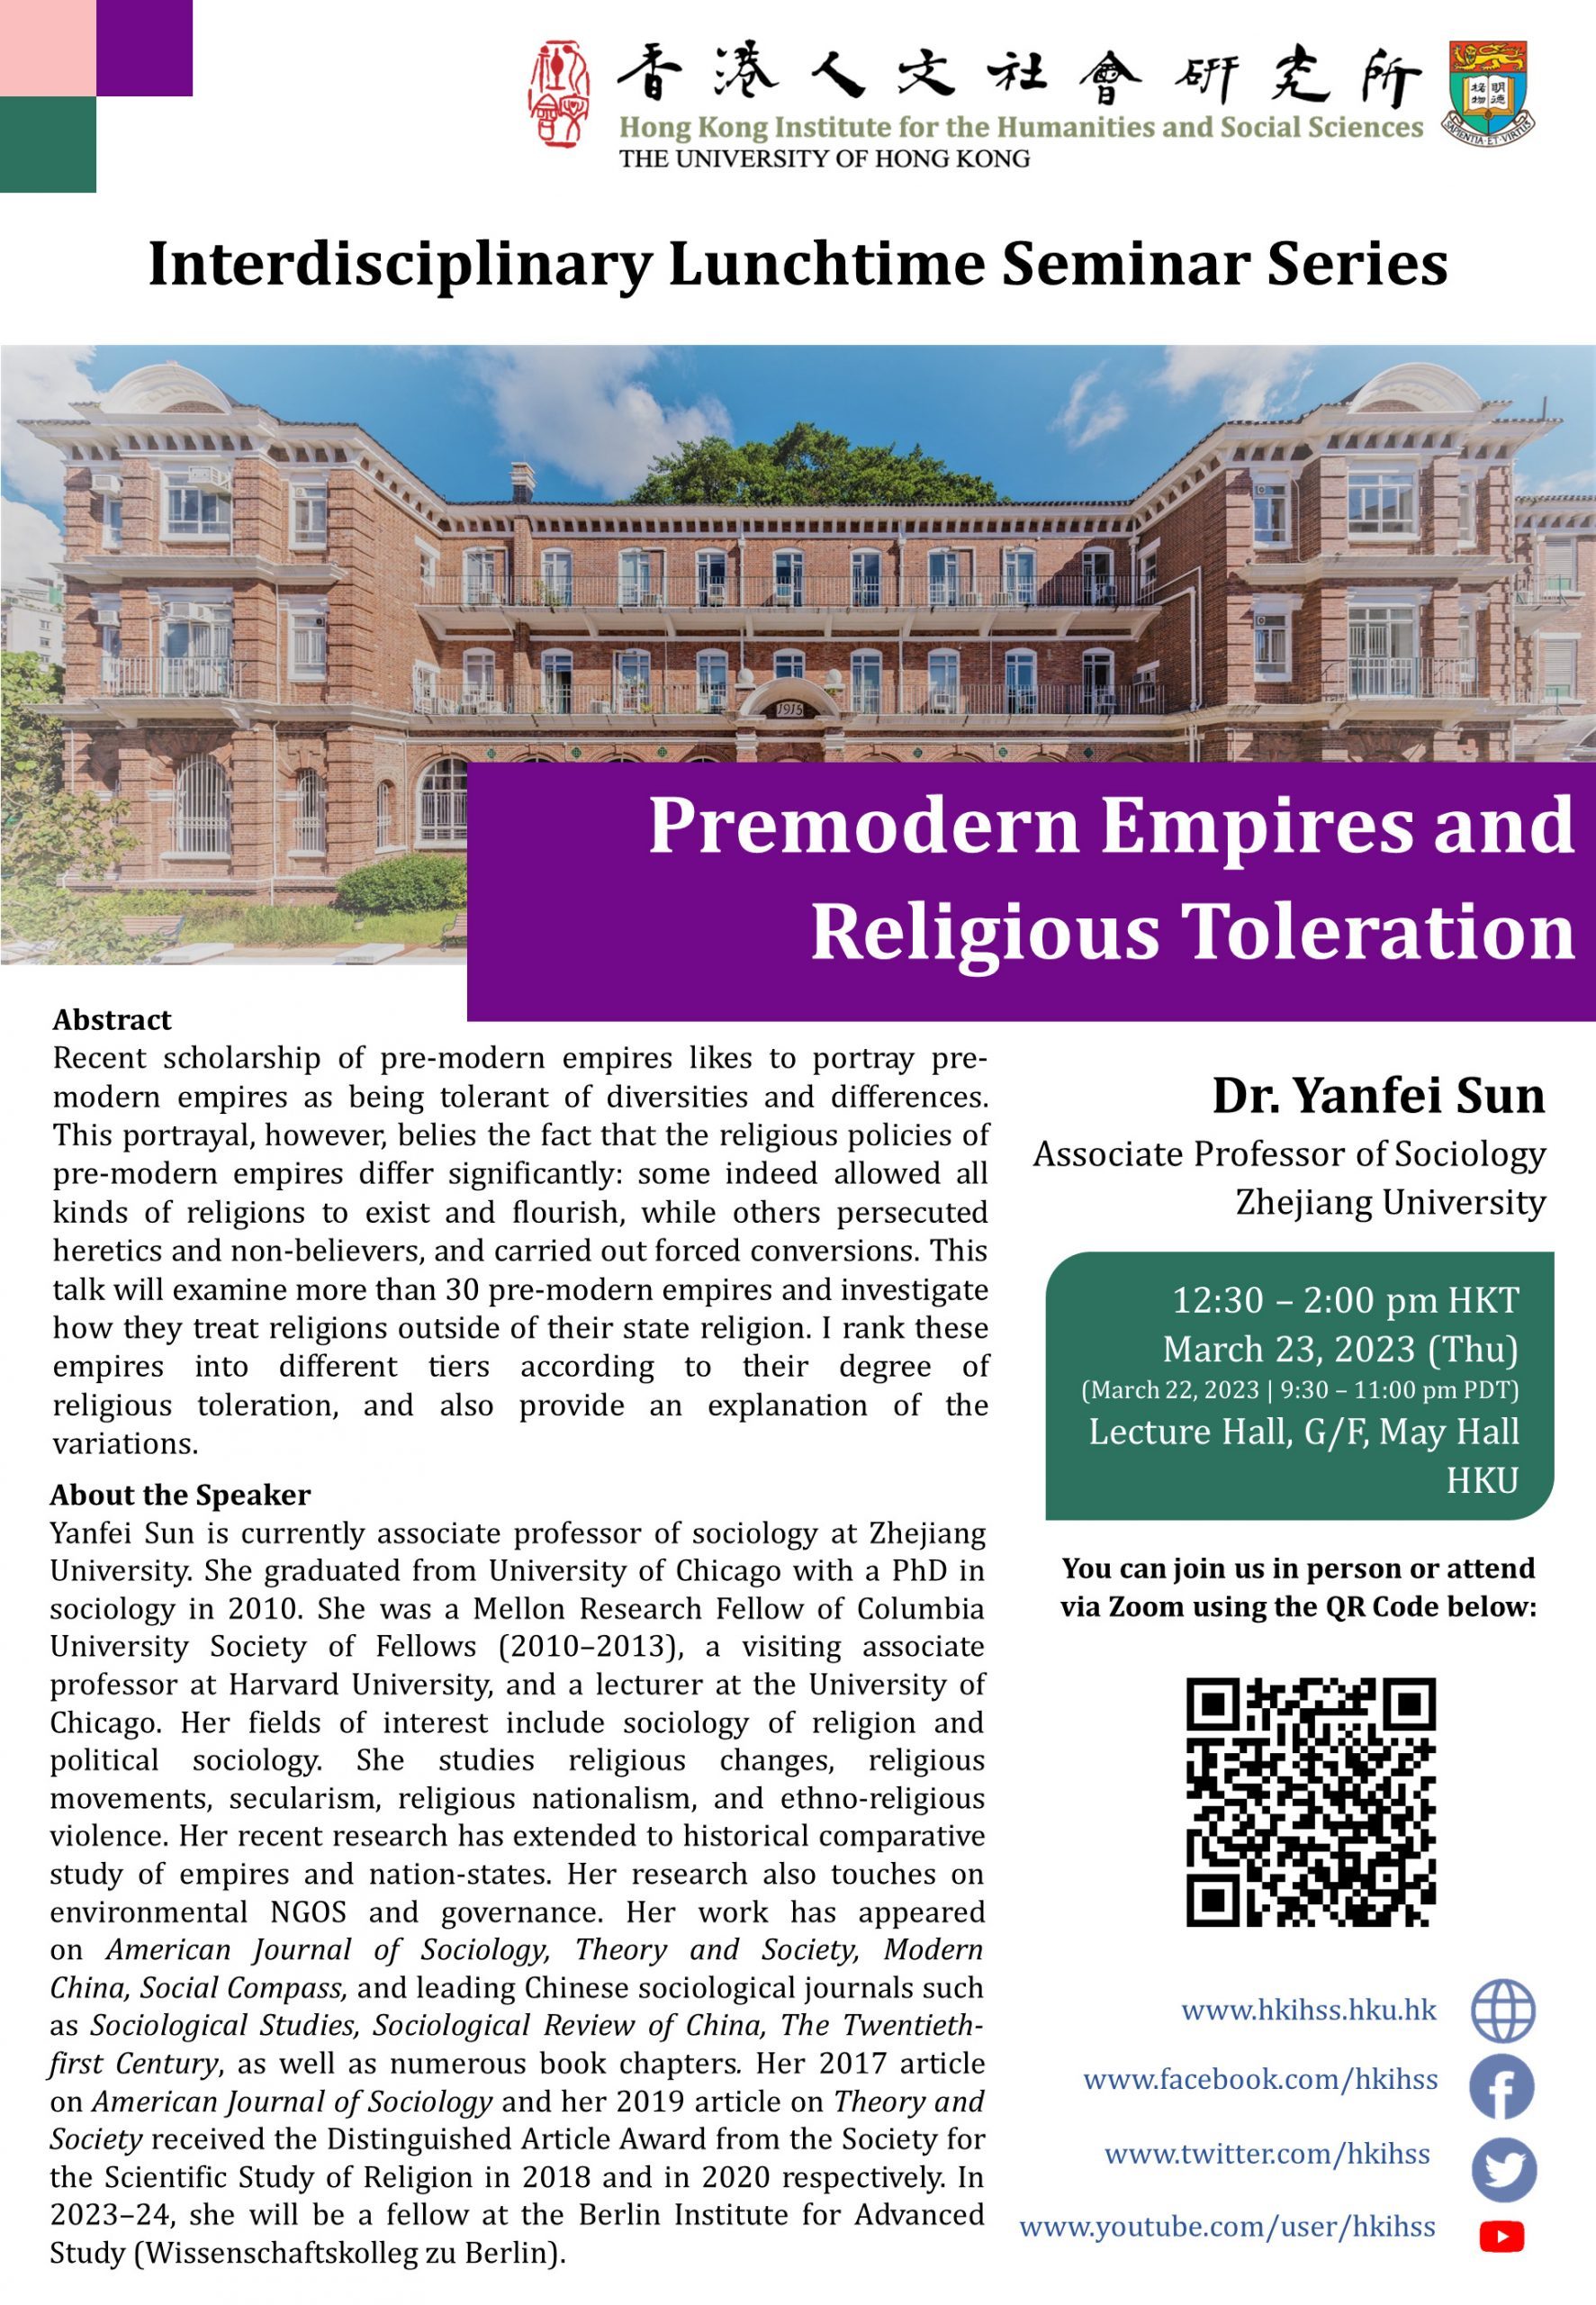 Interdisciplinary Lunchtime Seminar on “Premodern Empires and Religious Toleration ” by Professor Yanfei Sun (March 23, 2023)